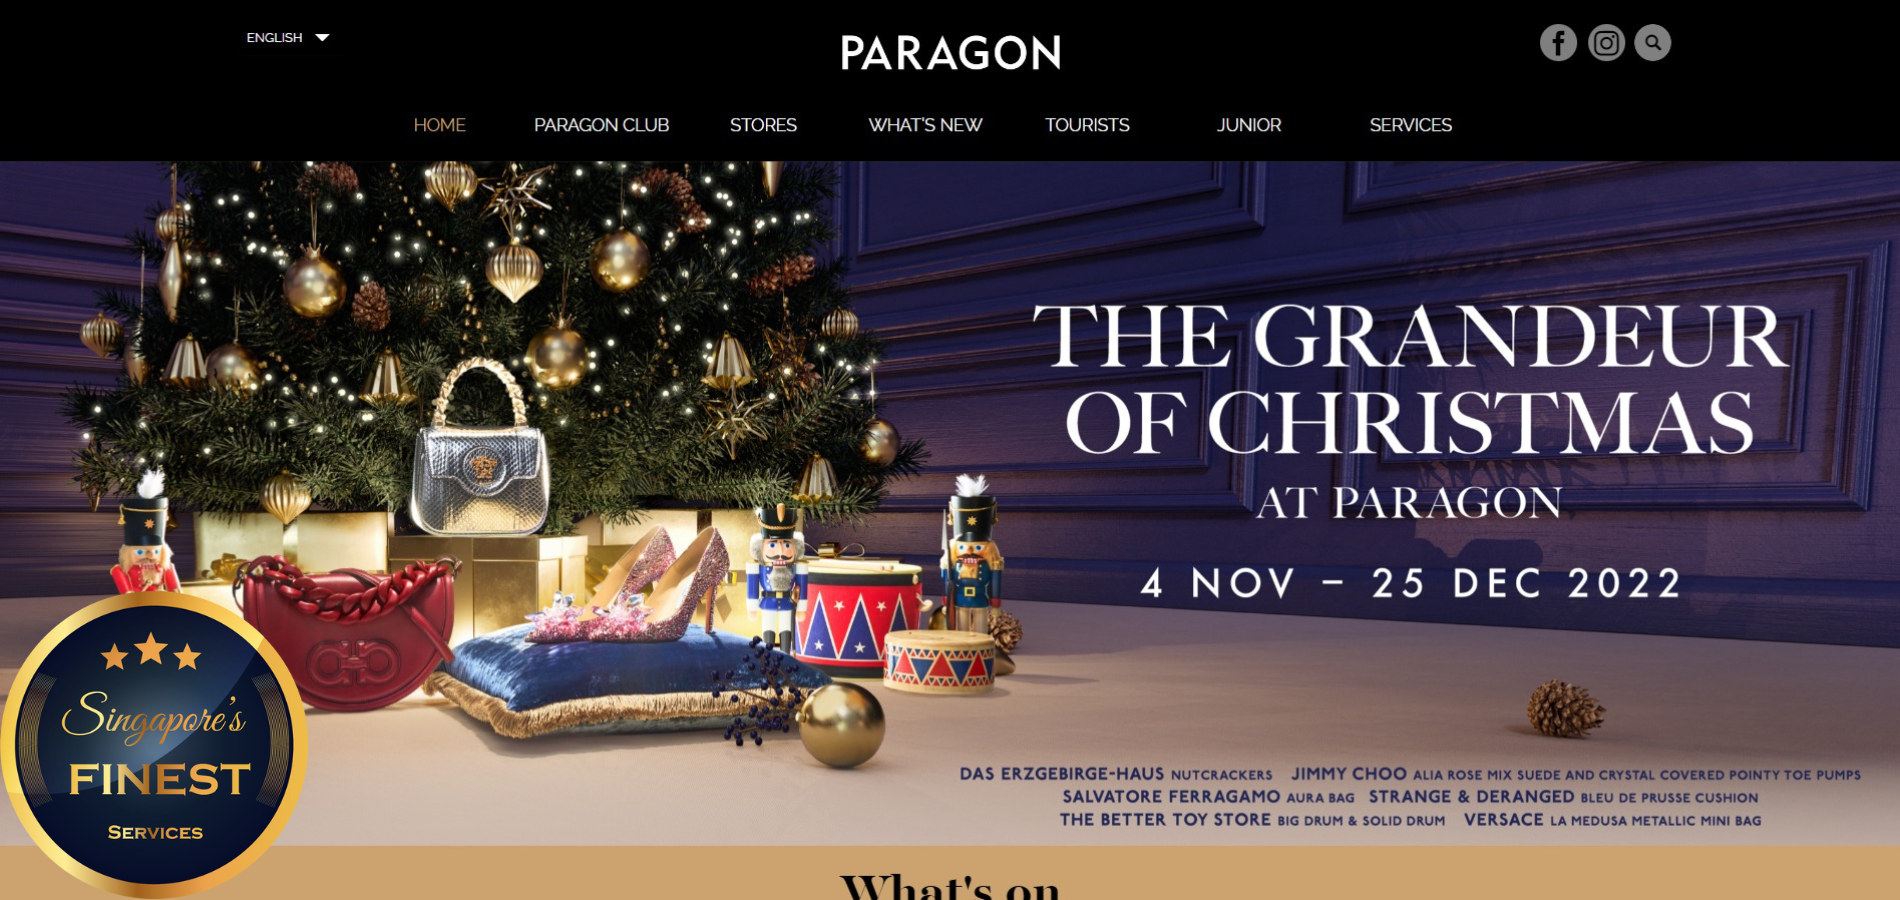 Paragon - Shopping Malls Singapore